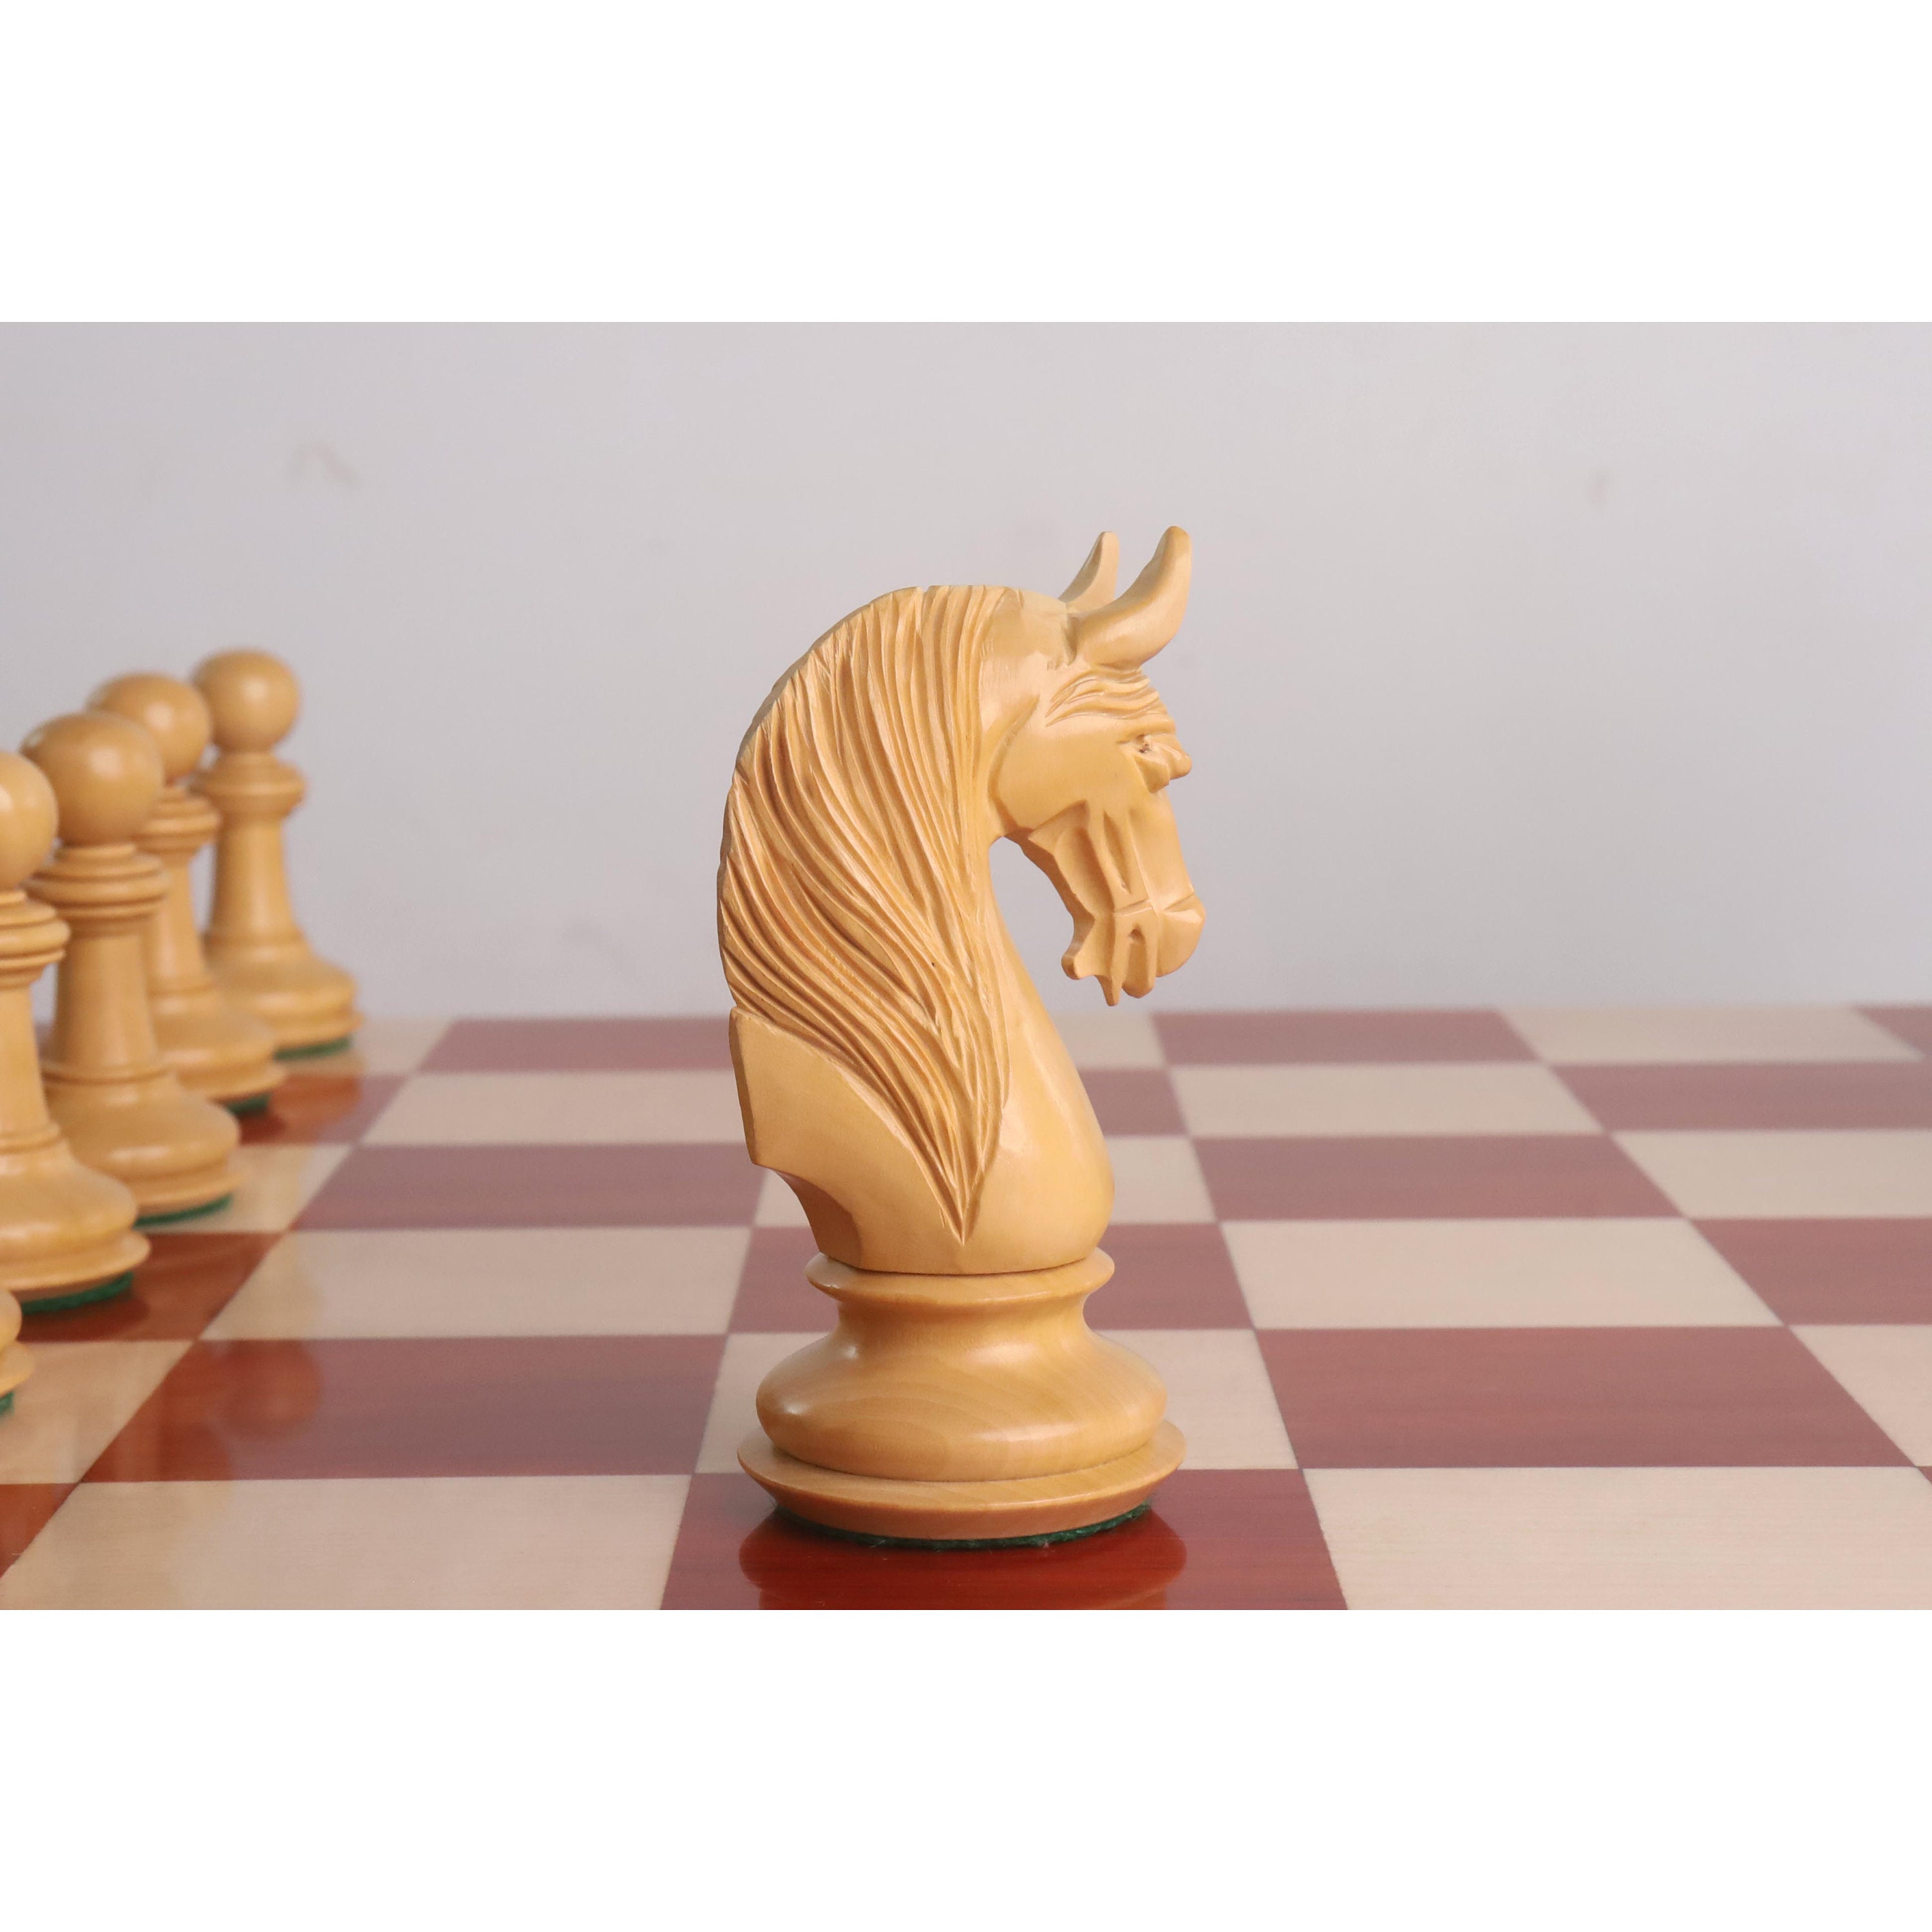 4.6 Spartacus Luxury Staunton Chess Pieces Only Set Bud 